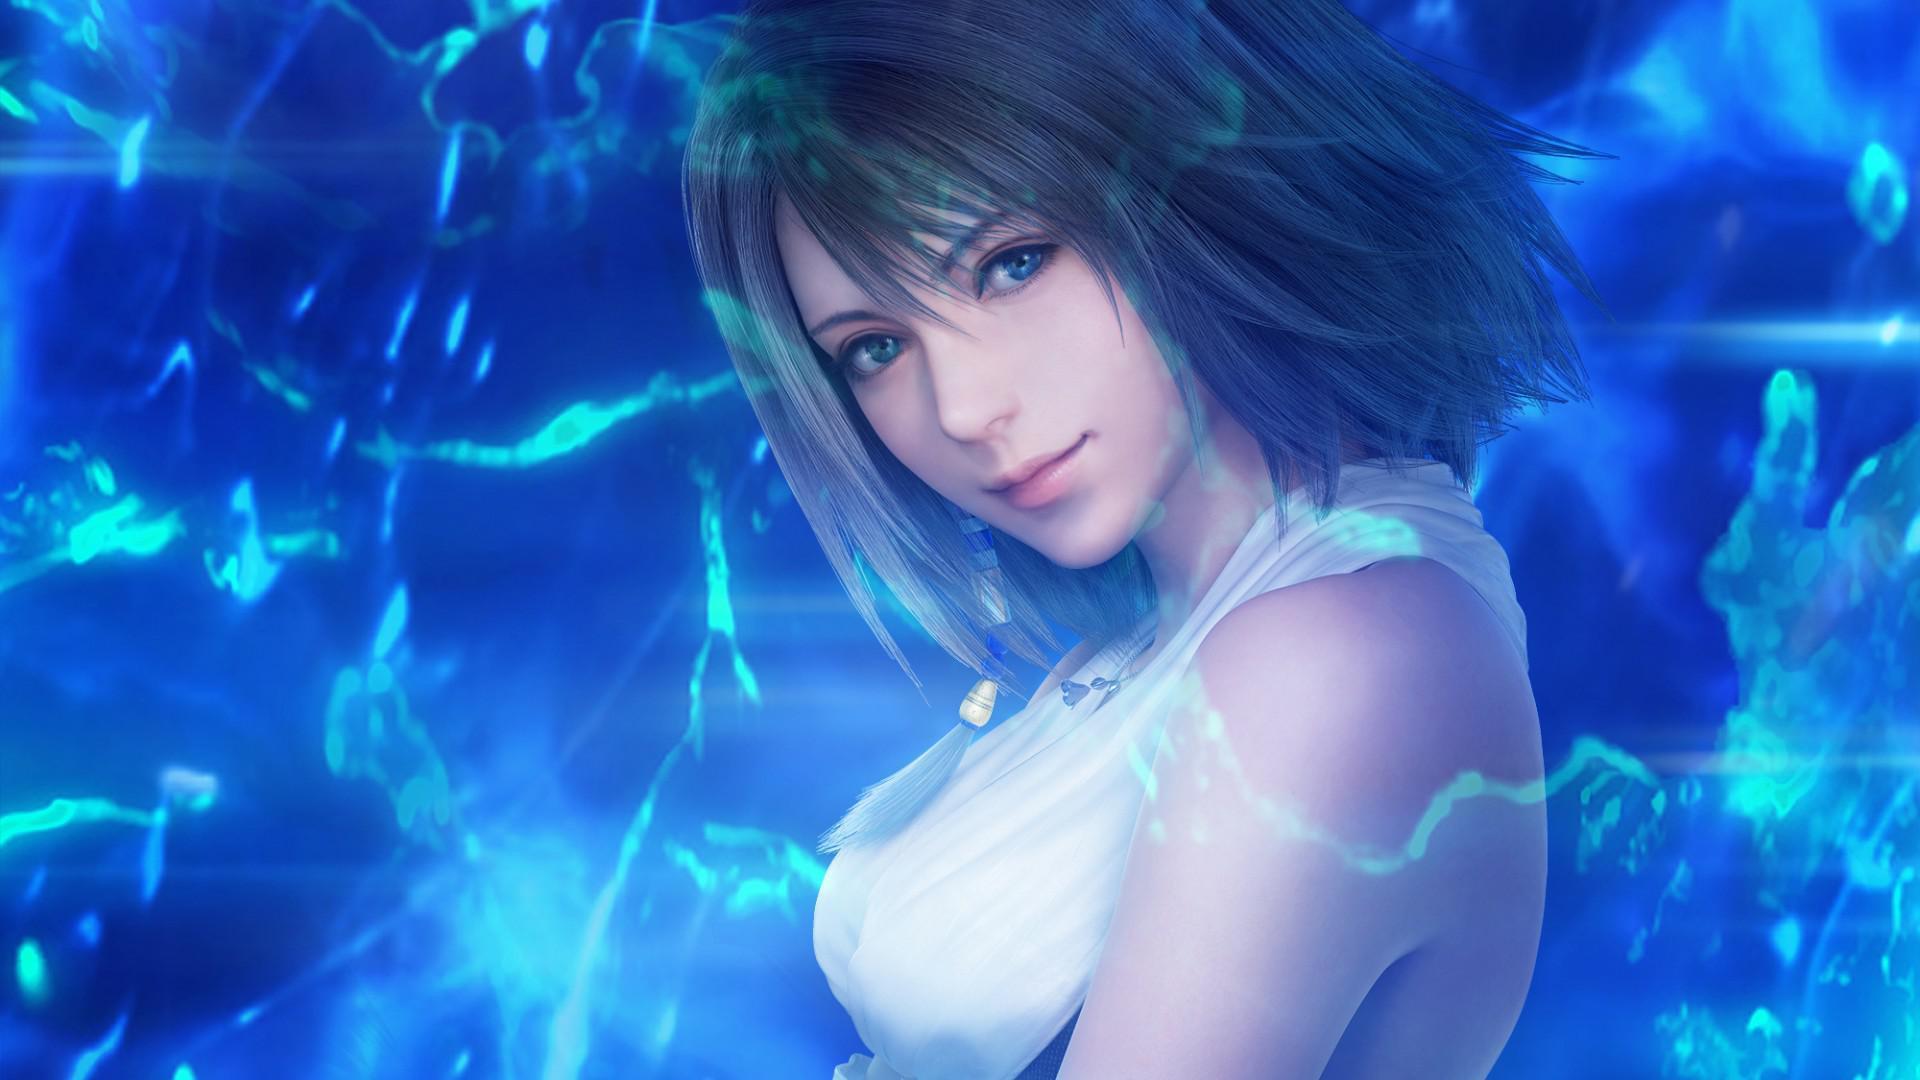 Final Fantasy girl background beautiful desktop wallpaper